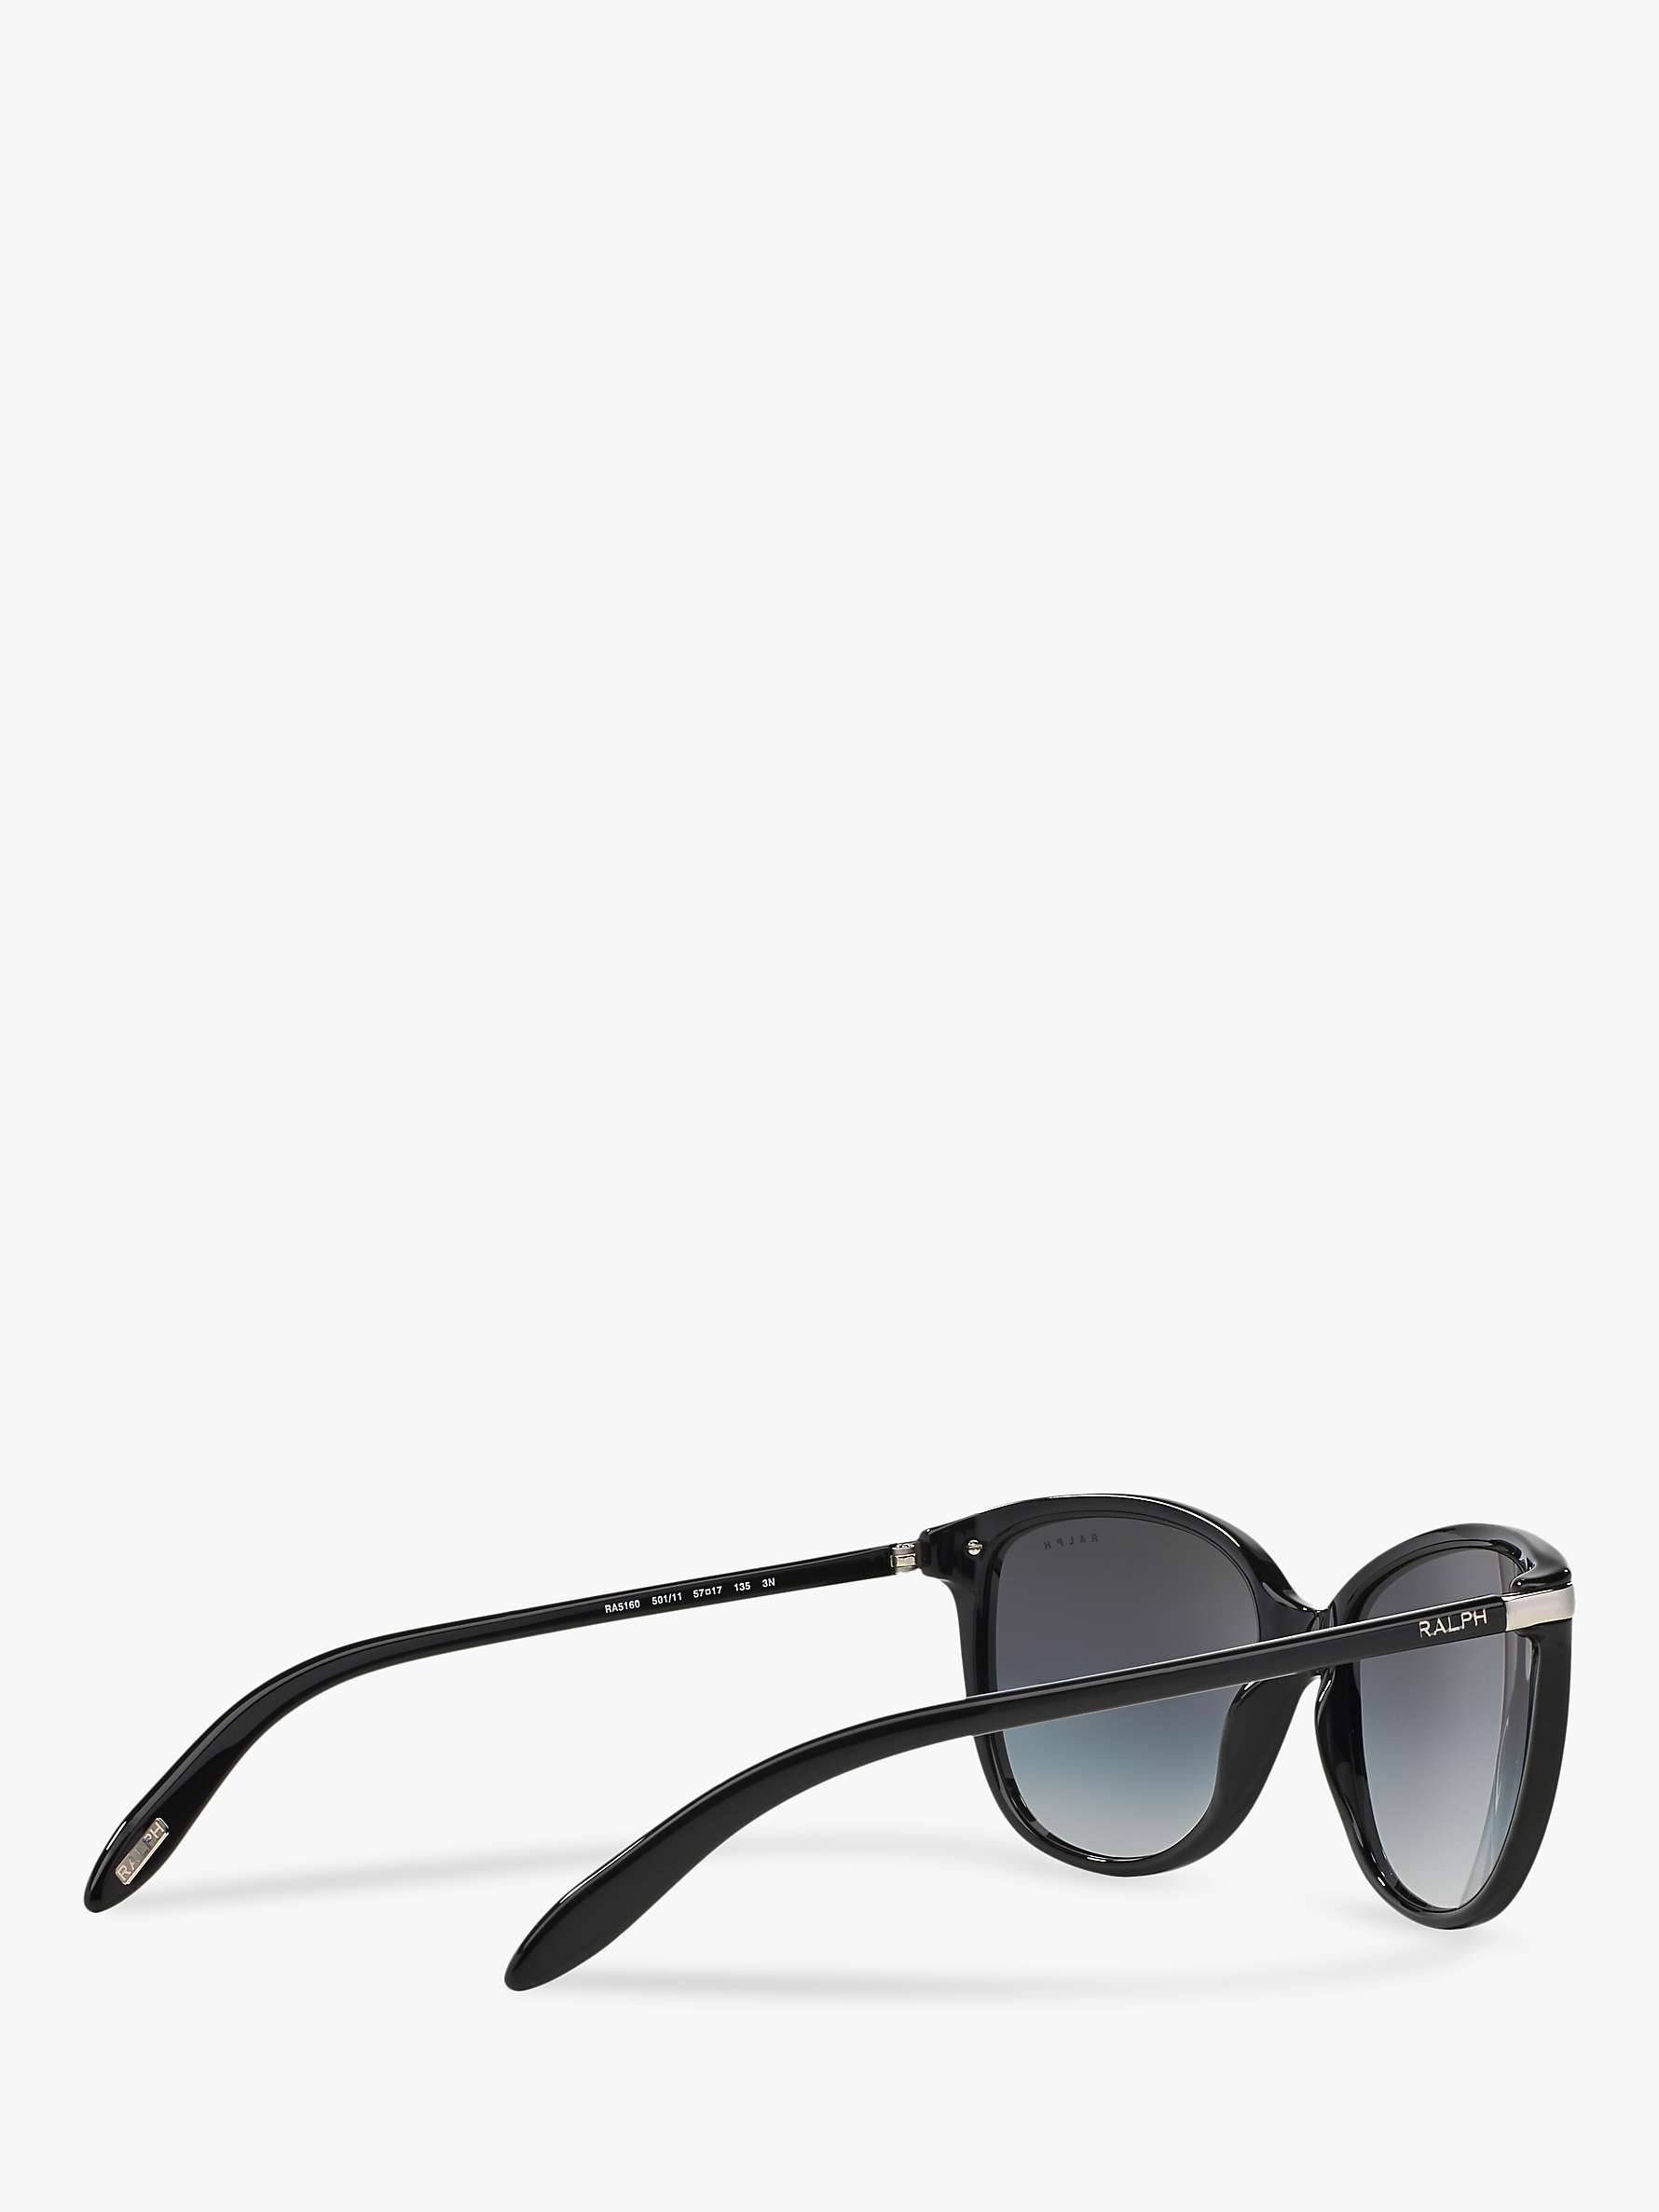 Buy Polo Ralph Lauren RA5160 Women's Cat's Eye Sunglasses, Black/Grey Online at johnlewis.com